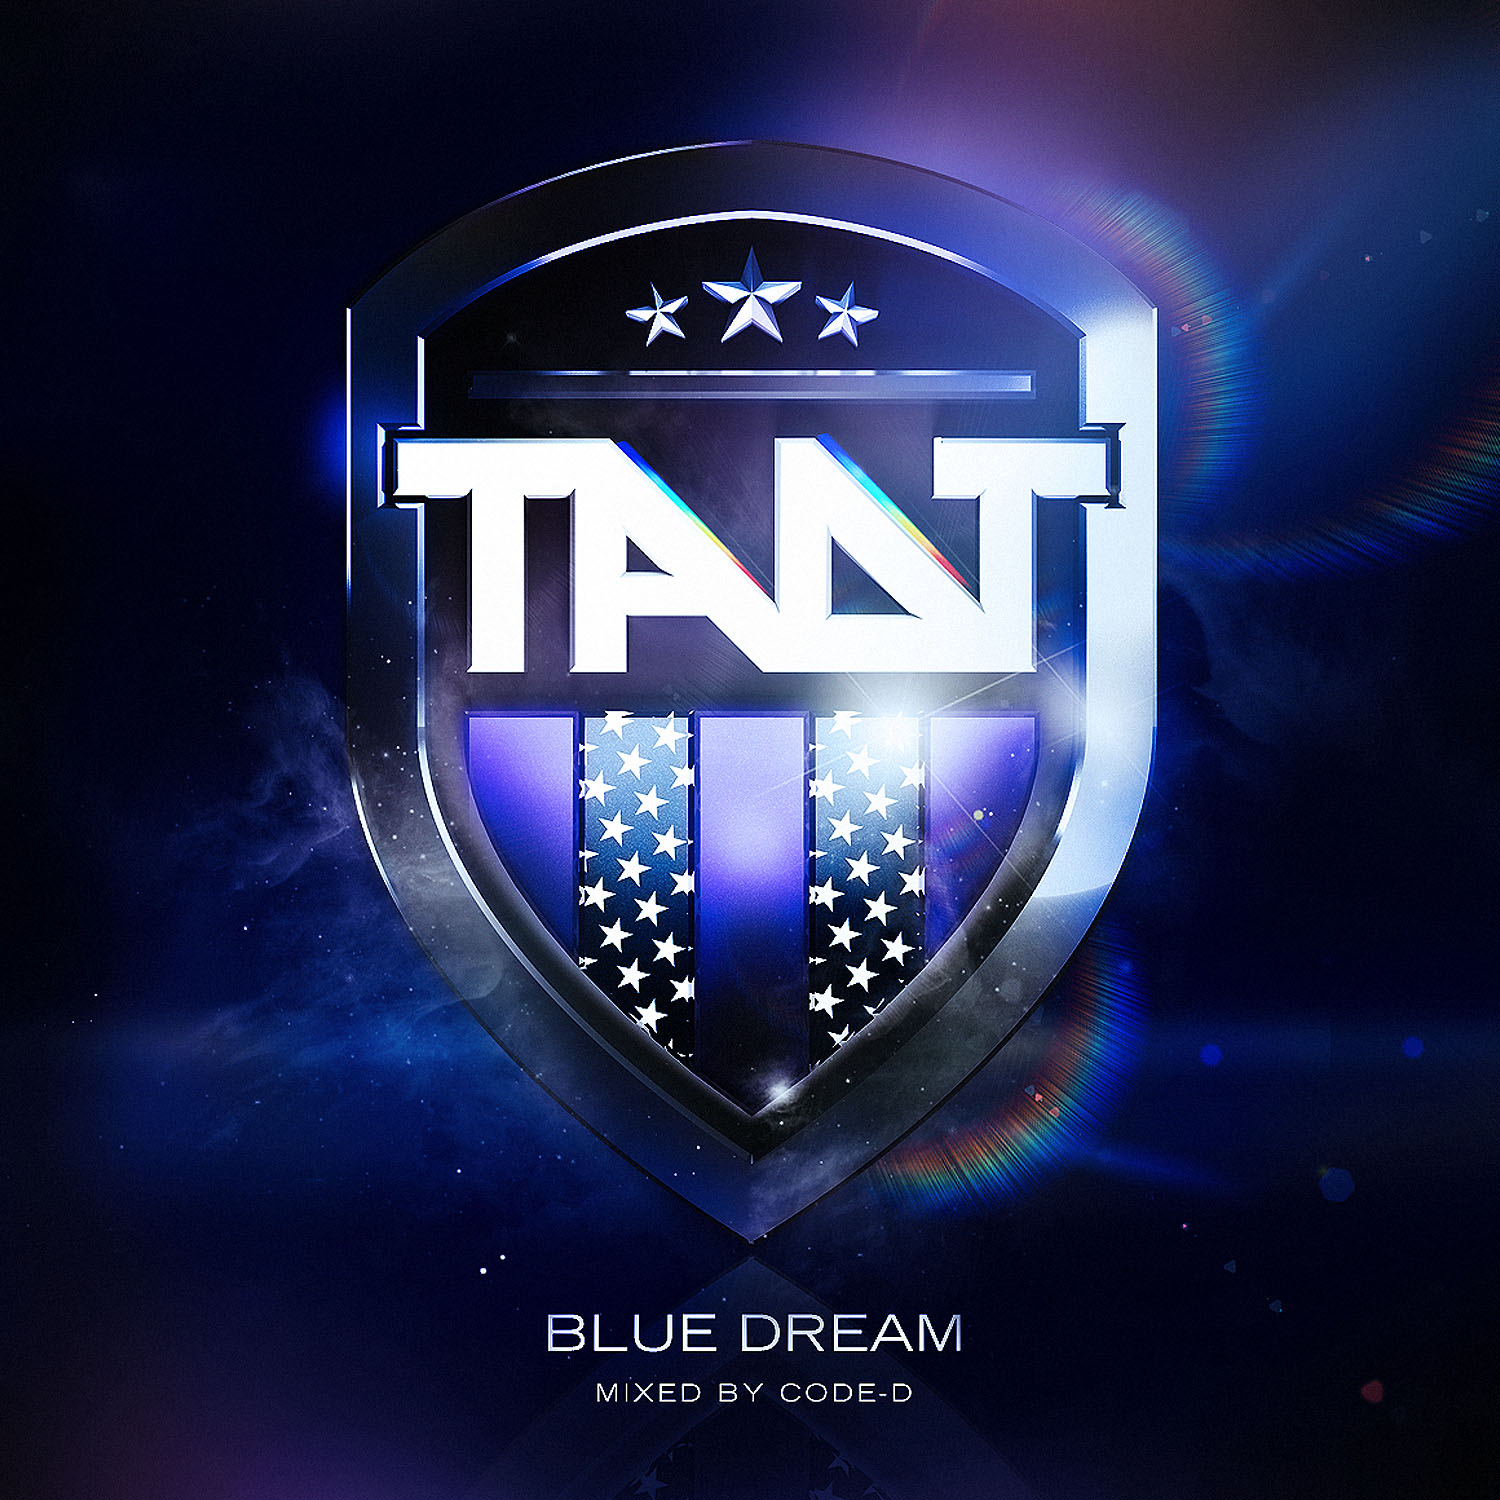 TADT Blue Dream